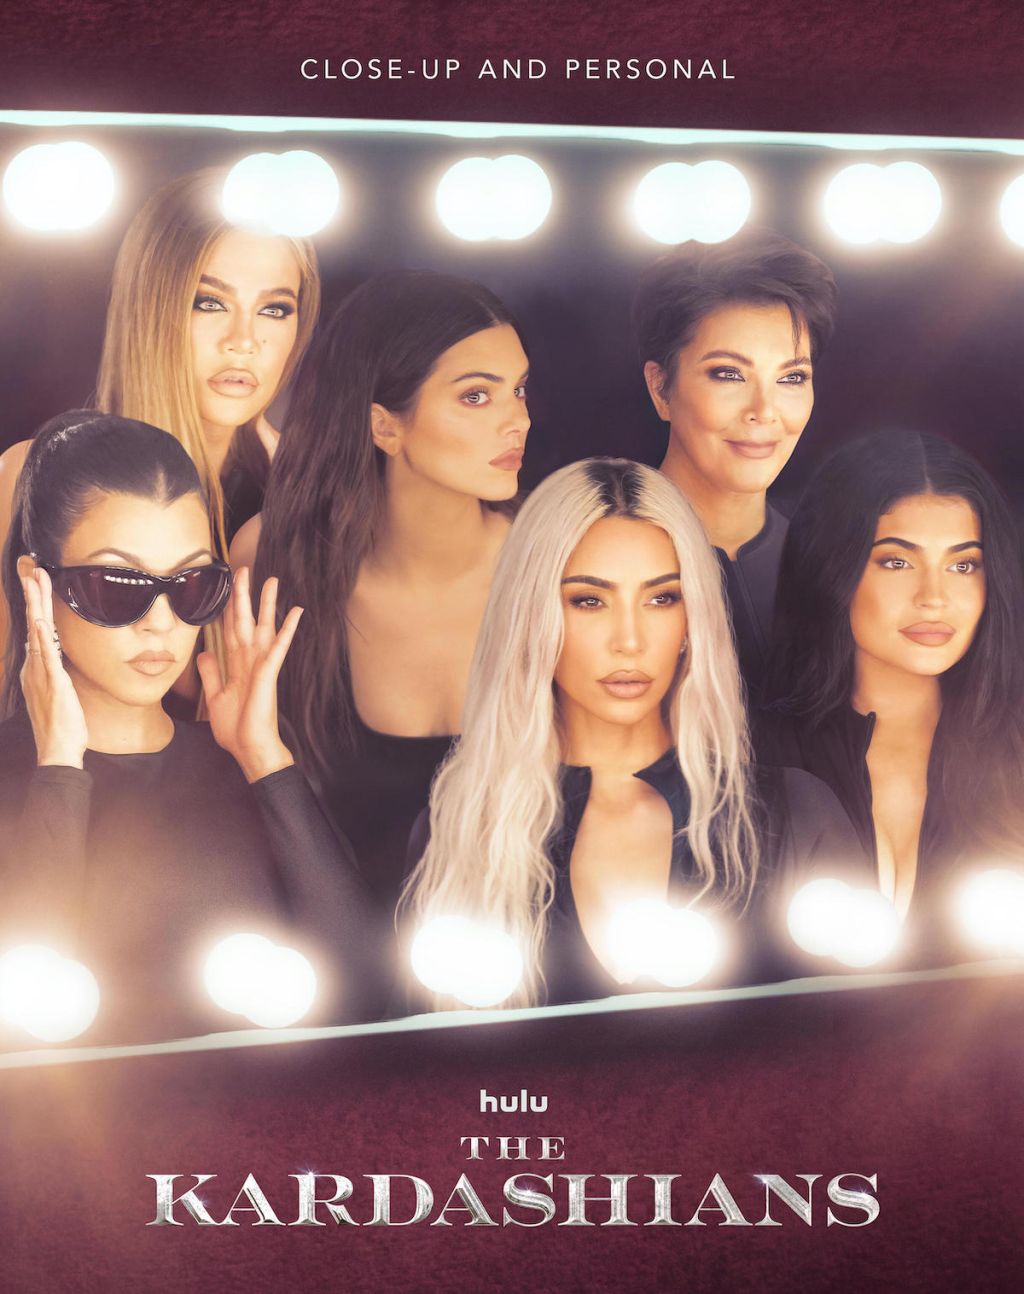 The Kardashians Season 3 Hulu Key art